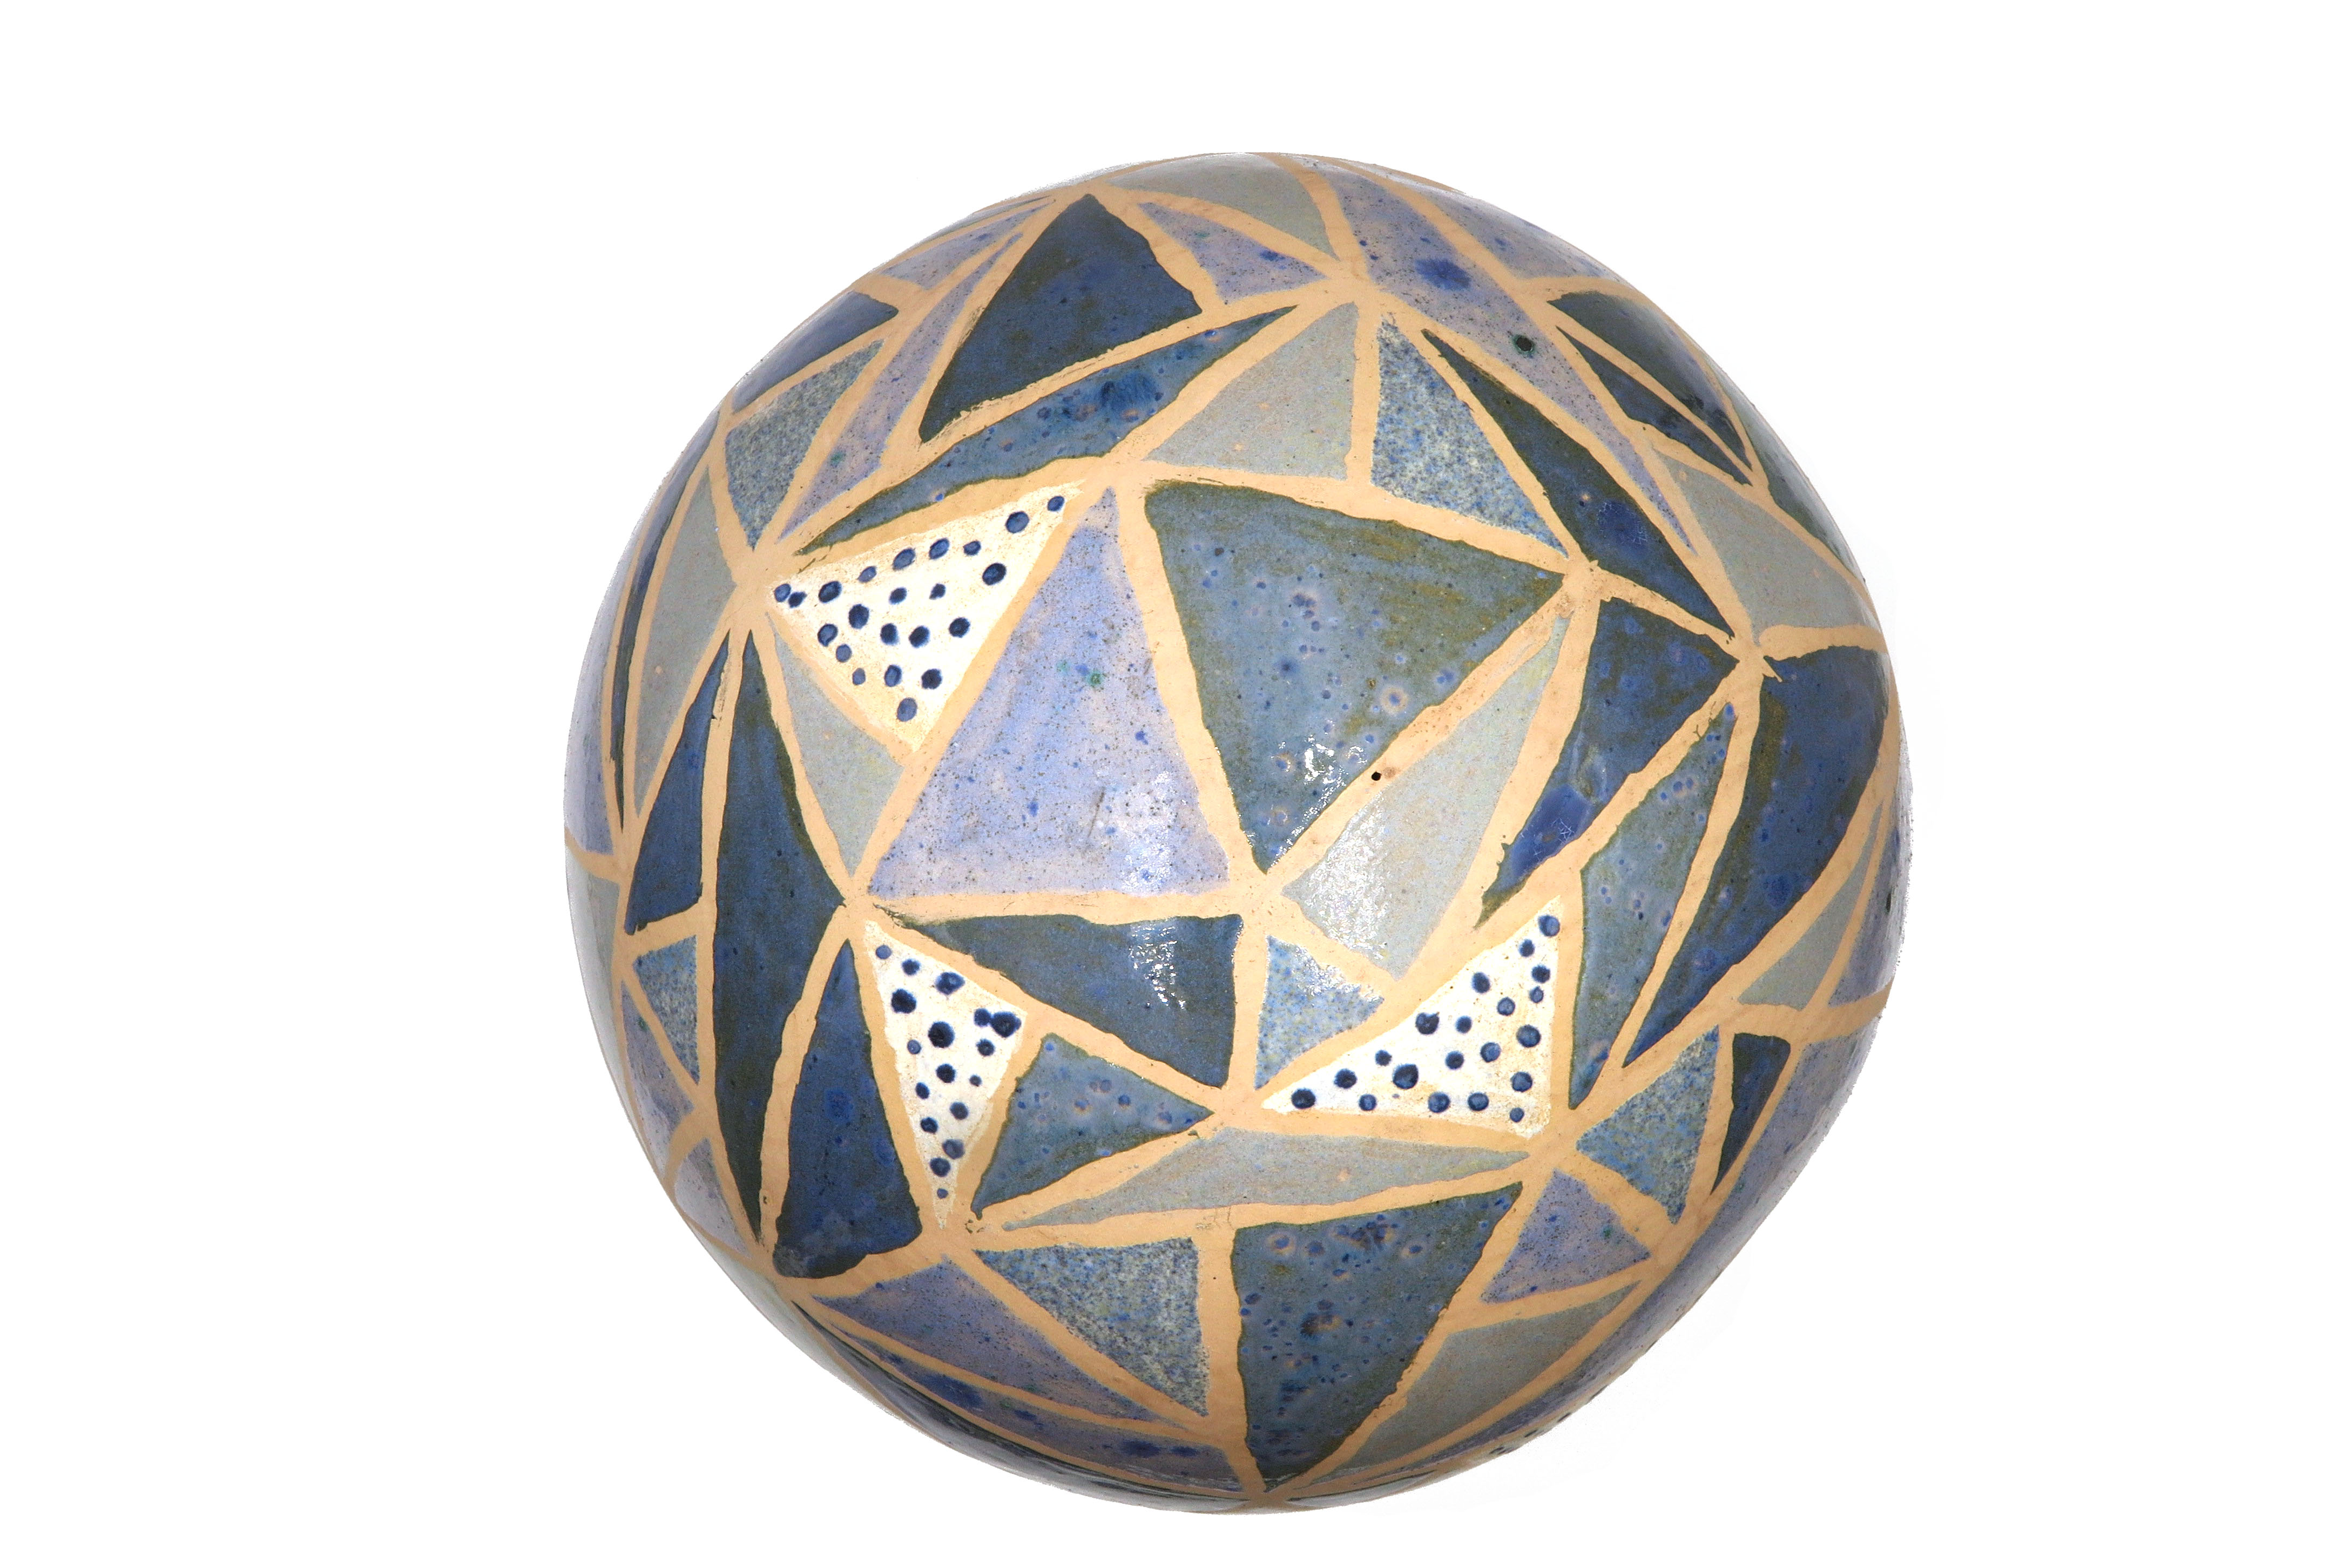  Kugel in Mosaikoptik, Blautönen  / L 28 cm